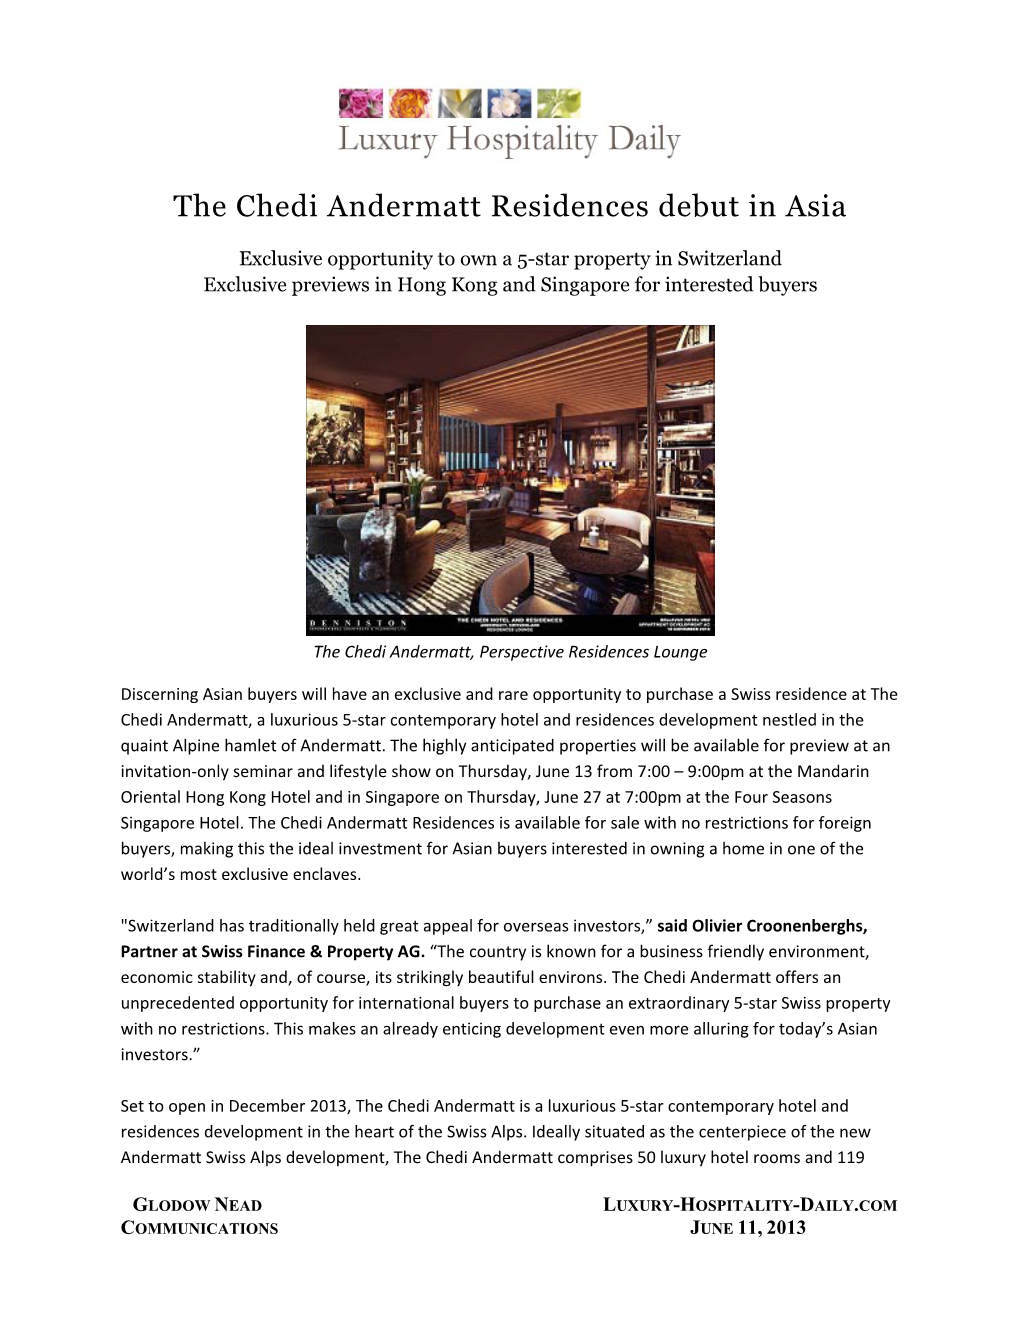 The Chedi Andermatt Residences Debut in Asia